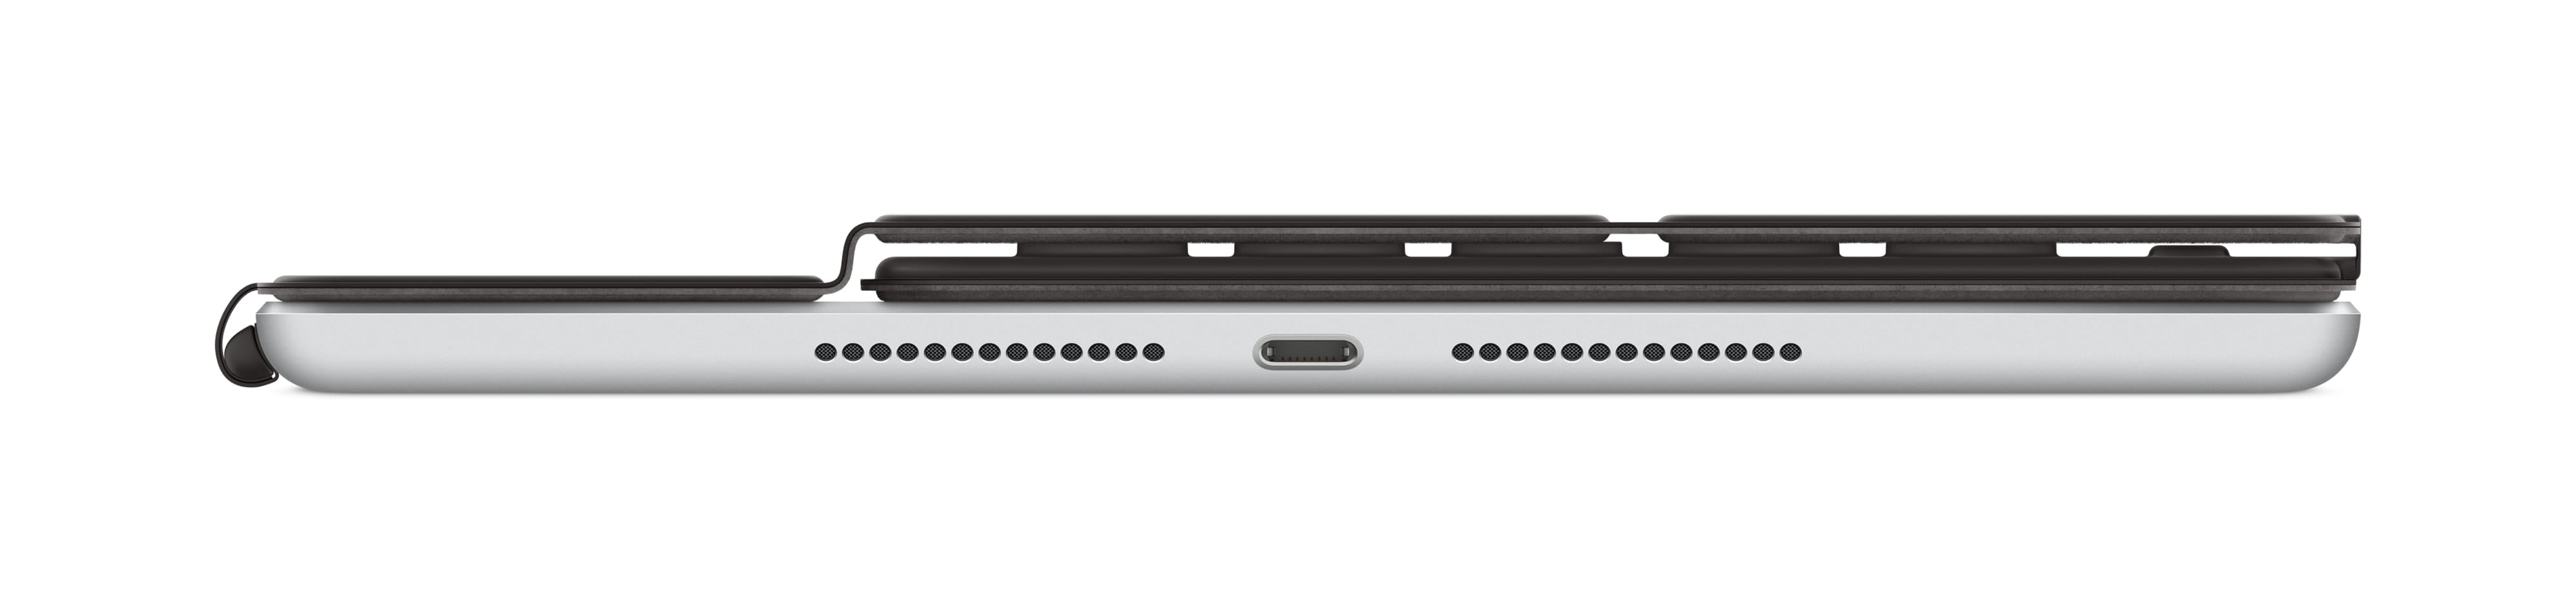 Apple Smart Keyboard for iPad (7th/8th/9th generation), iPad Air 